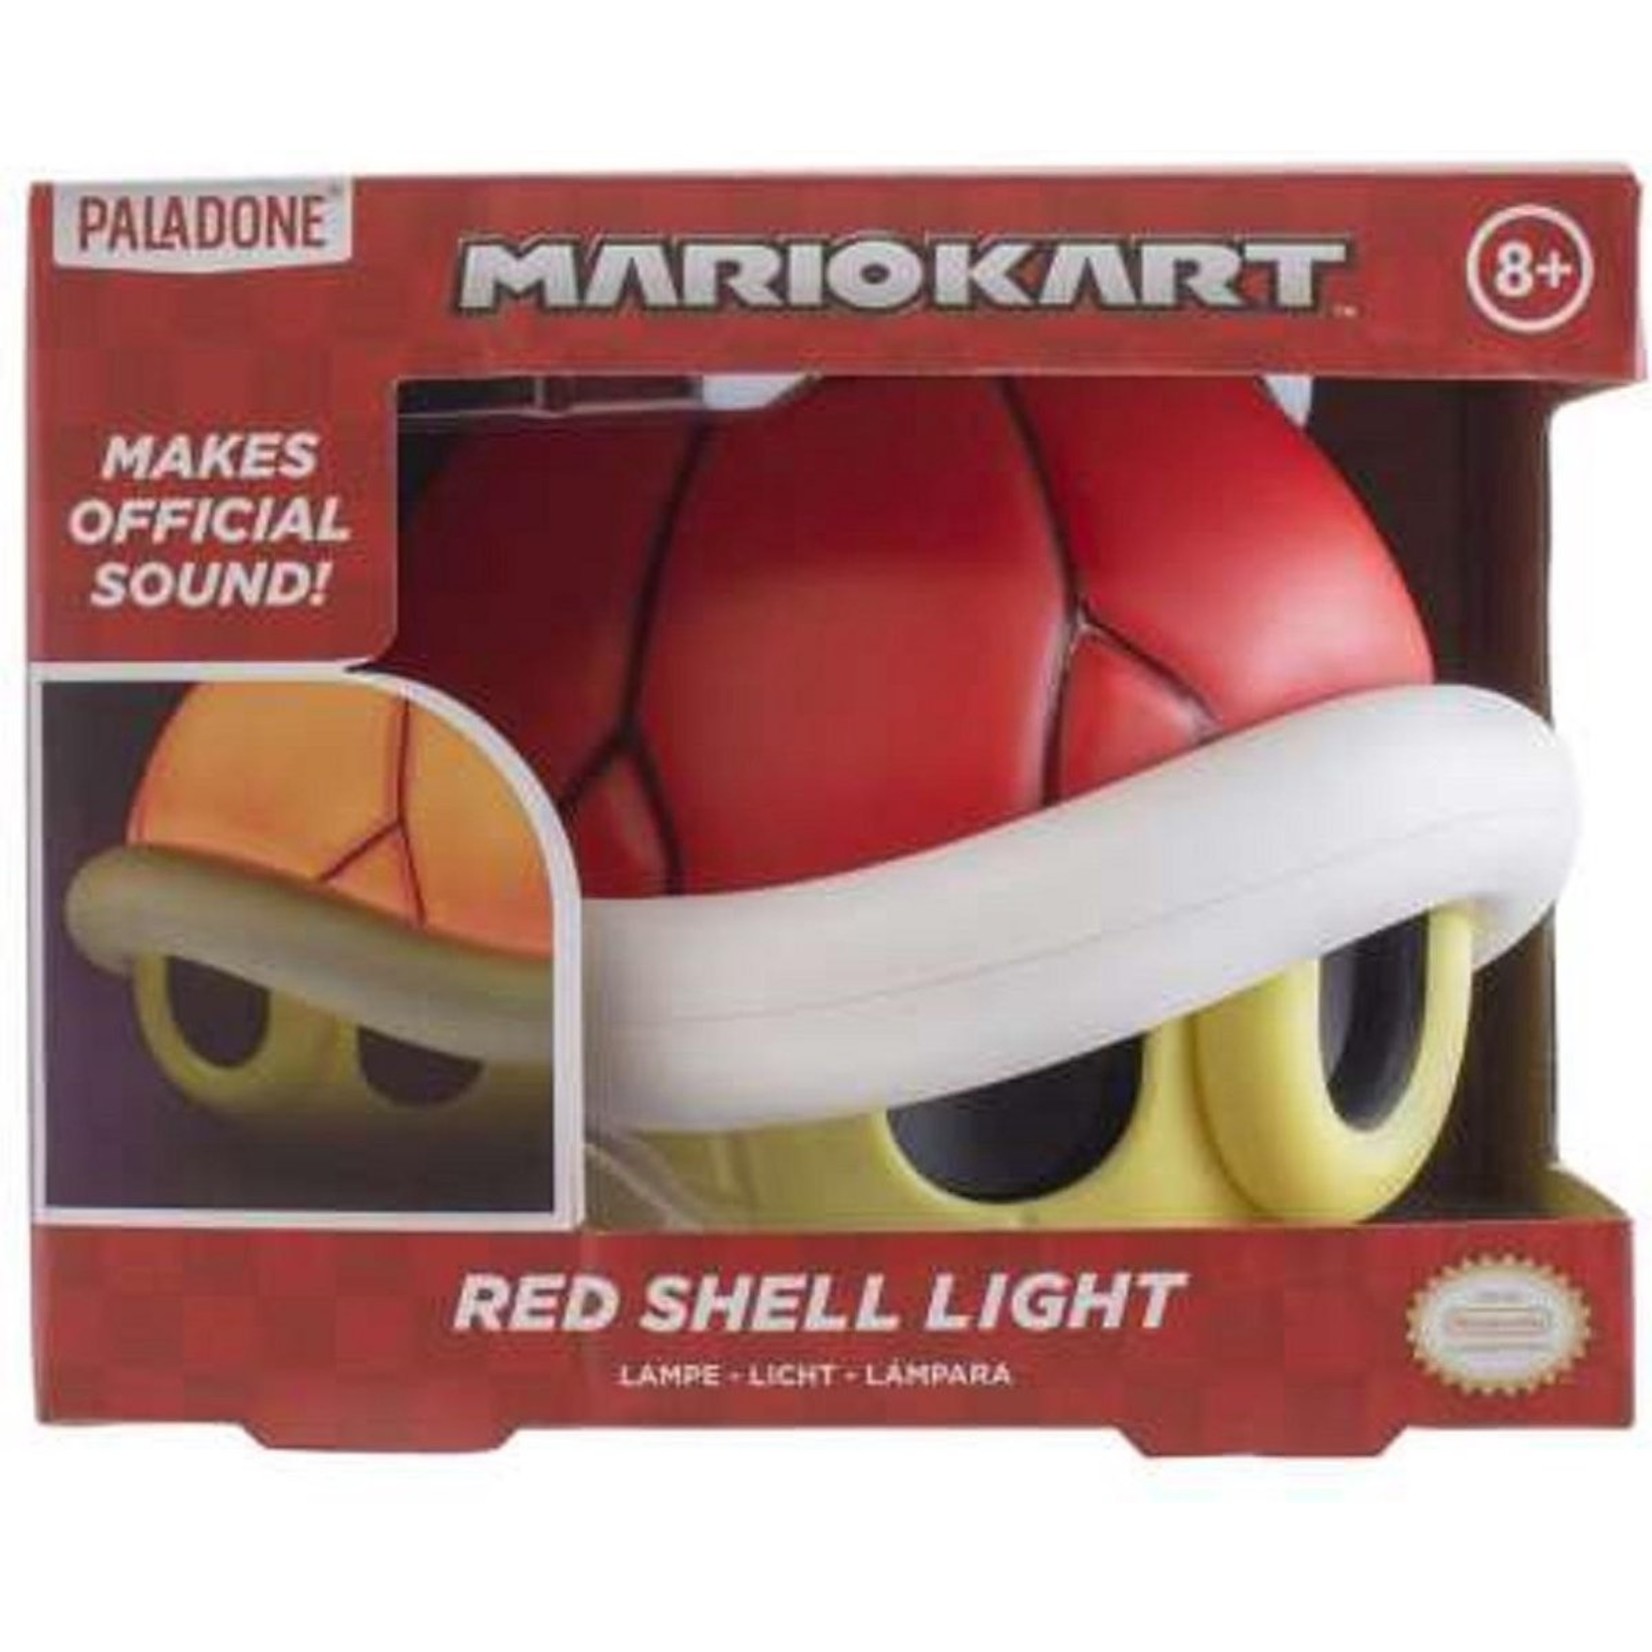 Paladone Paladone Nintendo Mariokart Red Shell Light